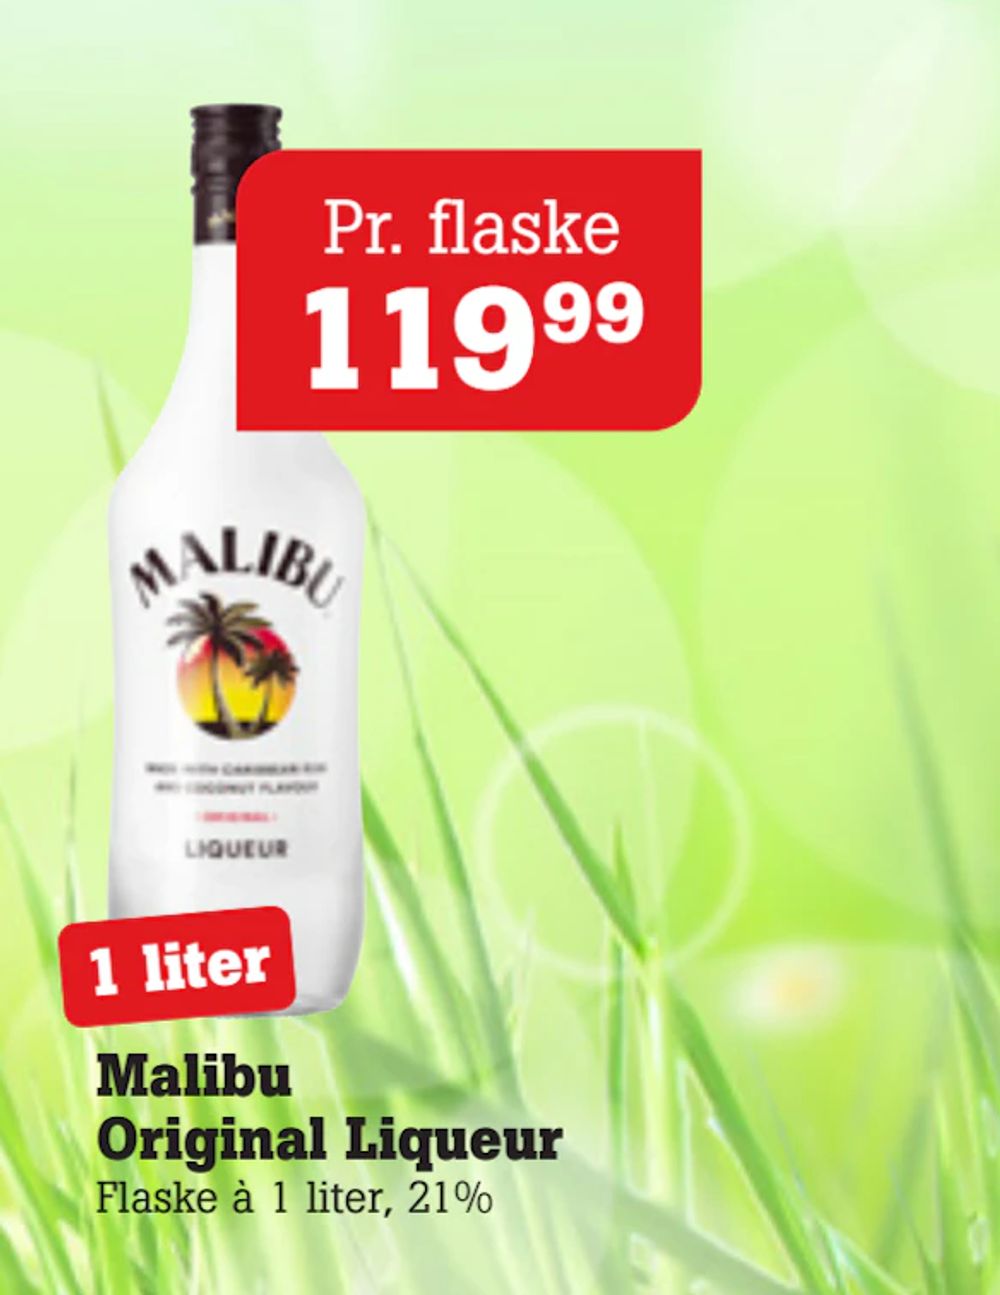 Tilbud på Malibu Original Liqueur fra Poetzsch Padborg til 119,99 kr.